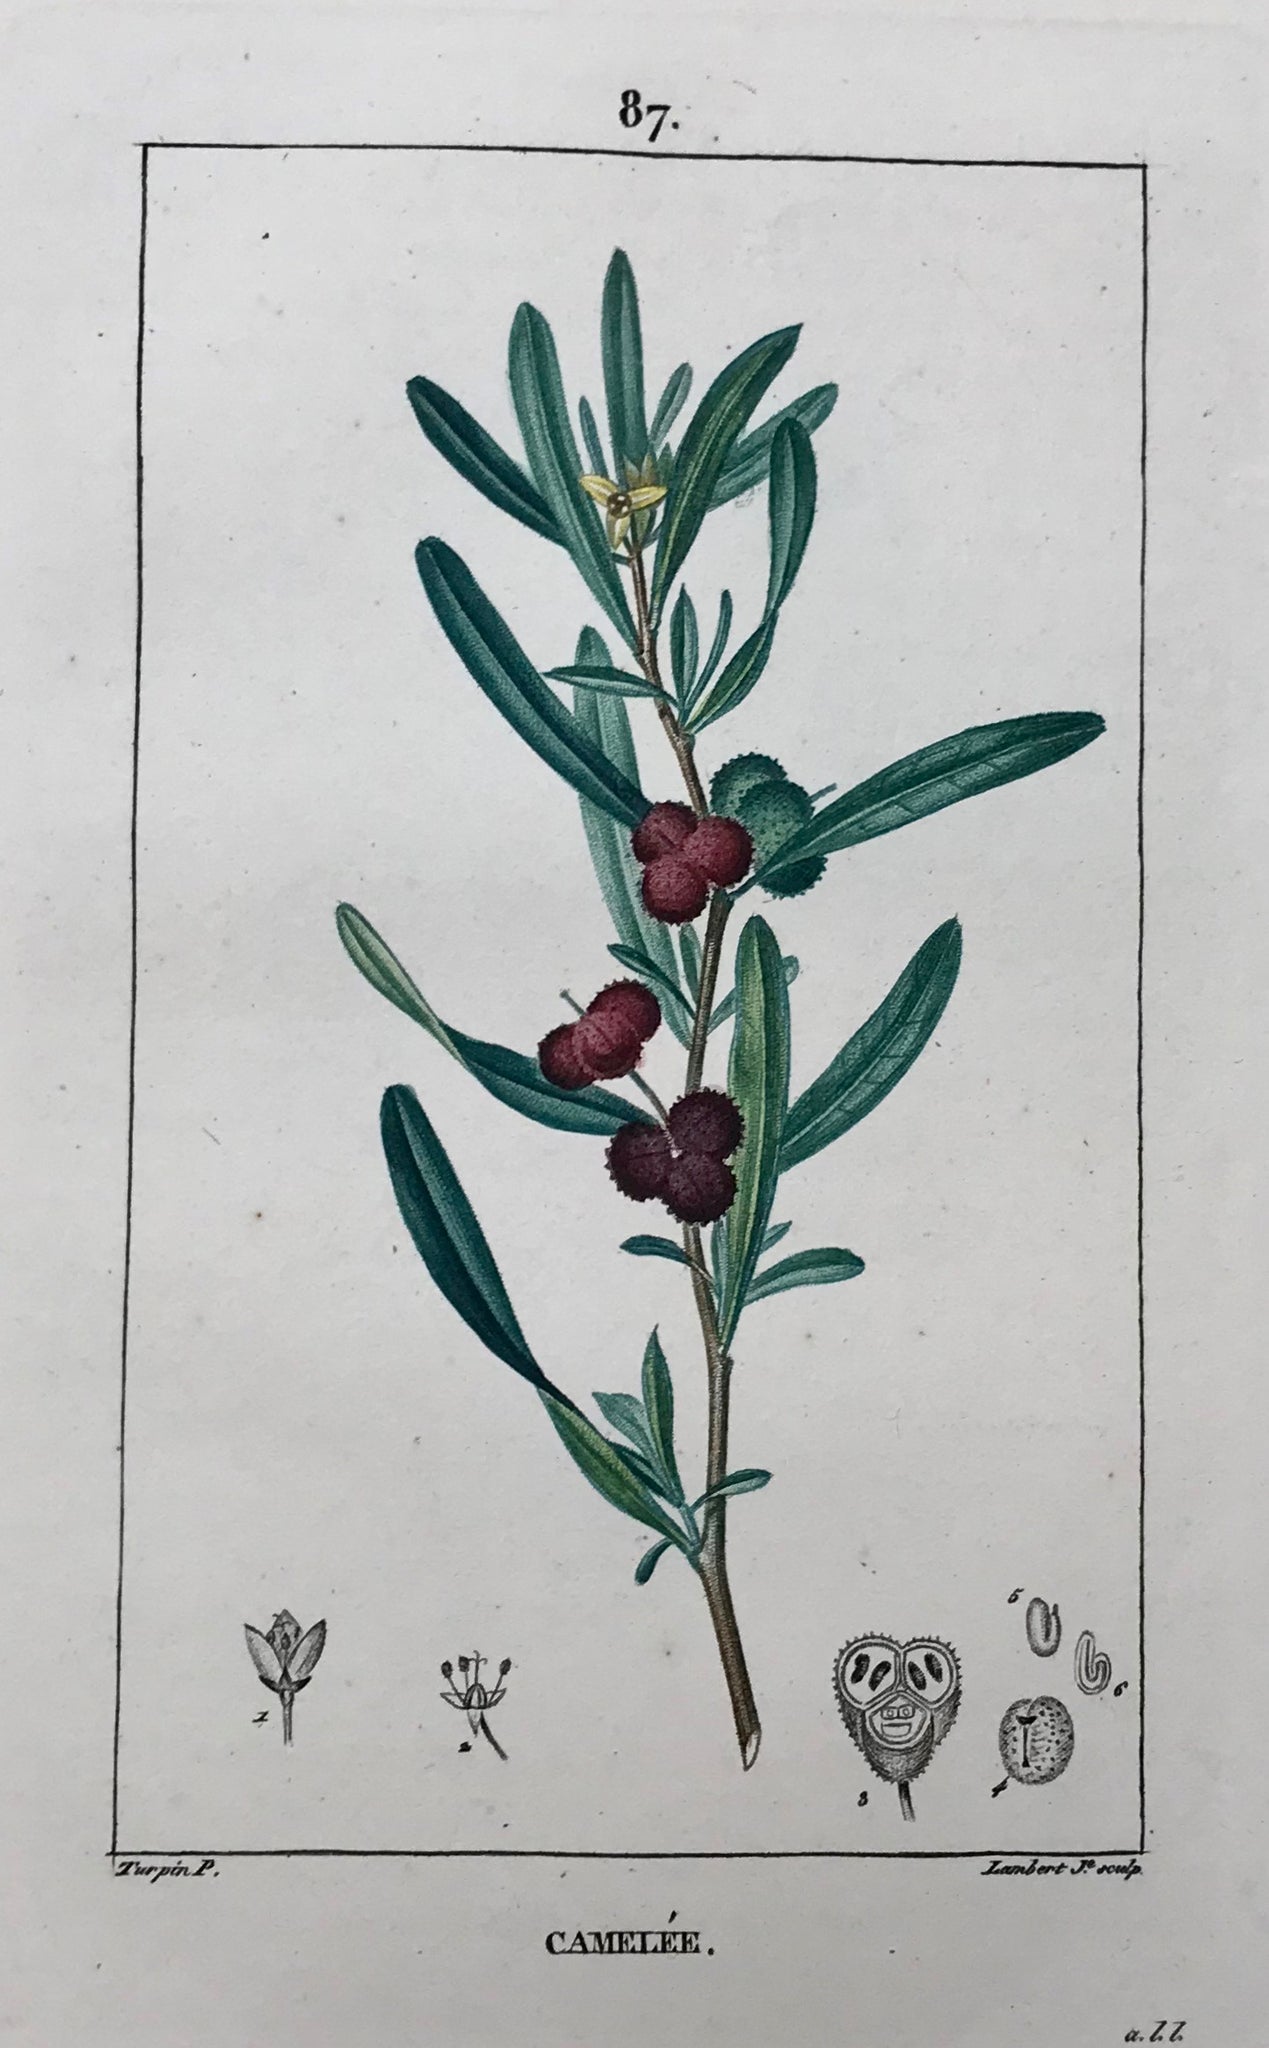 Botanicals, Françoise Turpin: Camelée